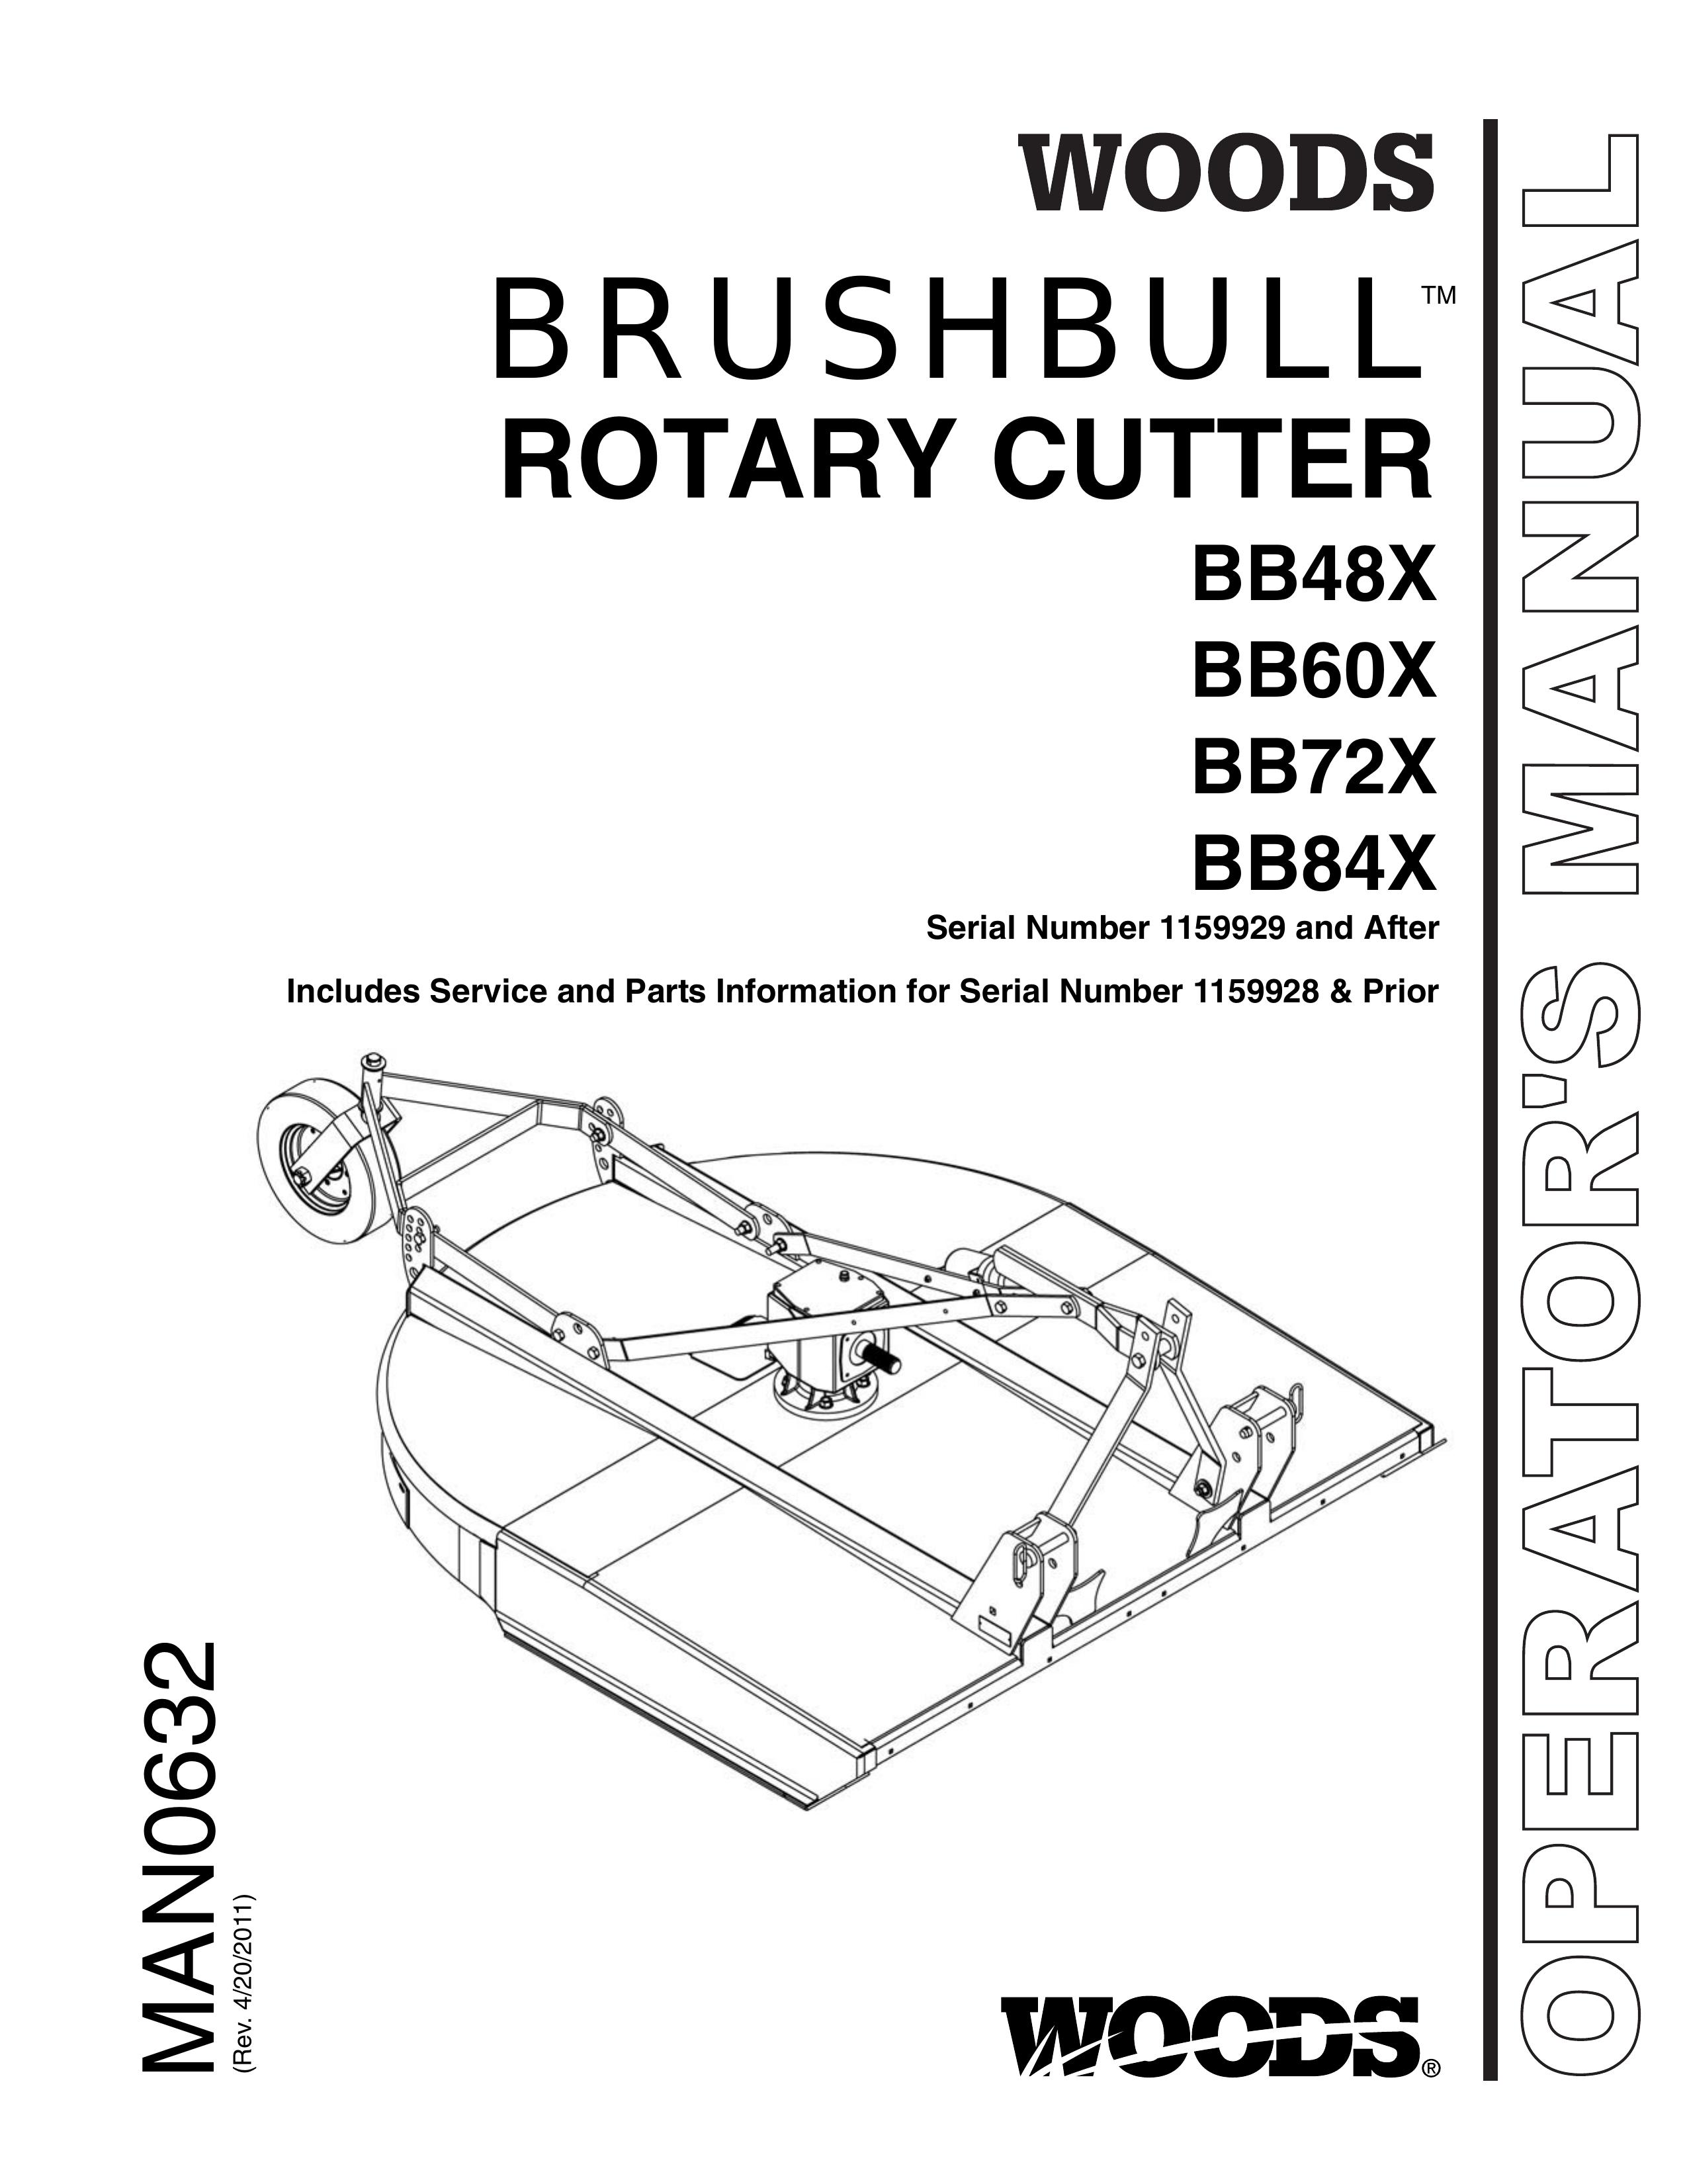 Woods Equipment BB84X Brush Cutter User Manual